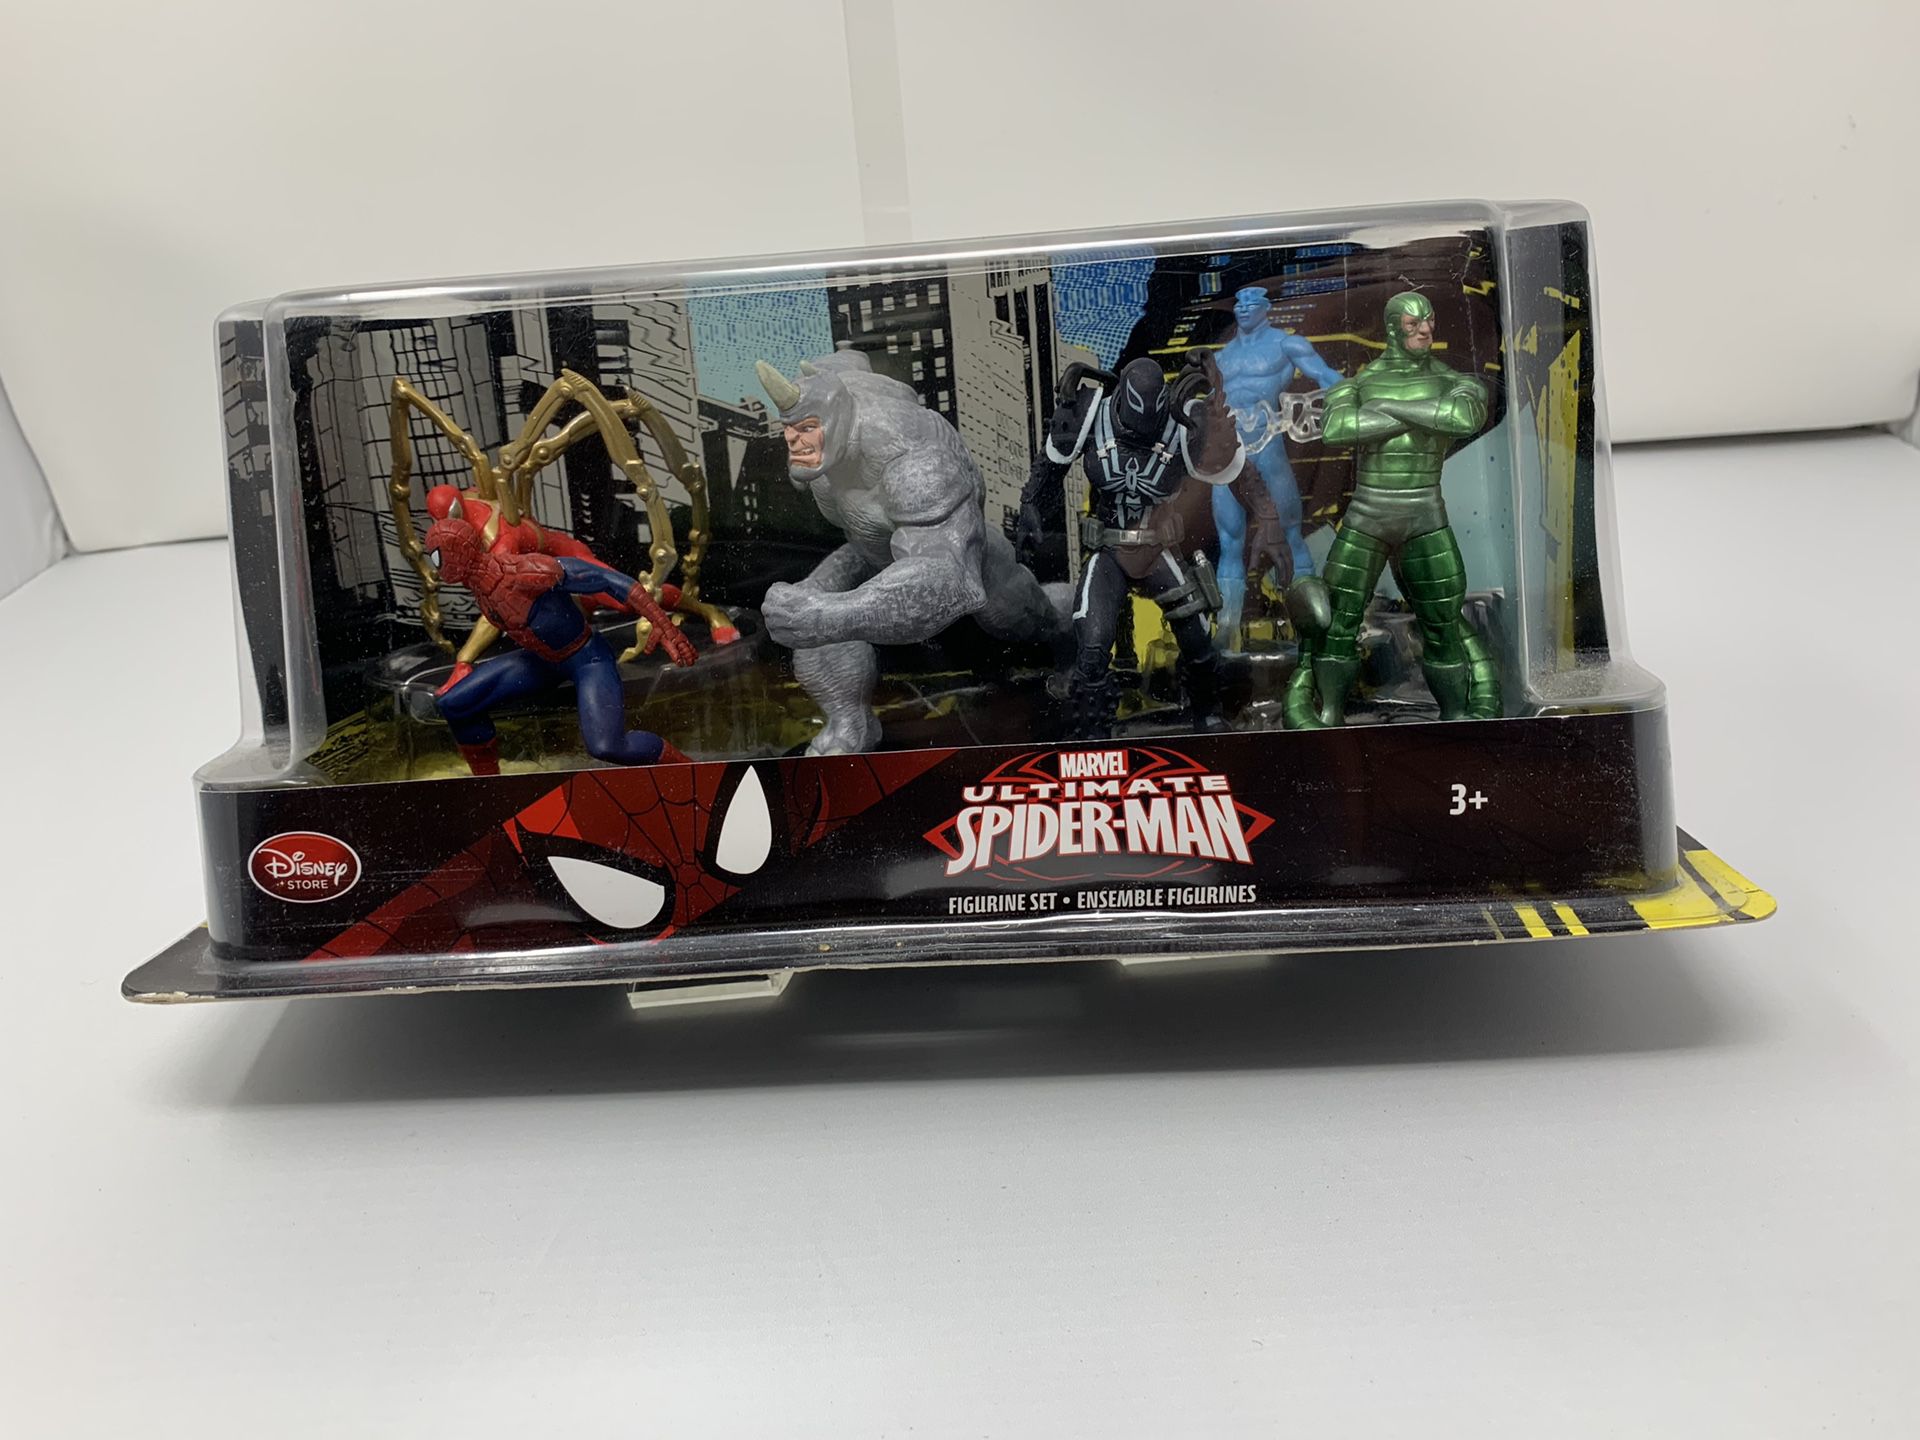 Marvel’s Ultimate Spider-Man Disney Store exclusive Figurine Set (Brand New)